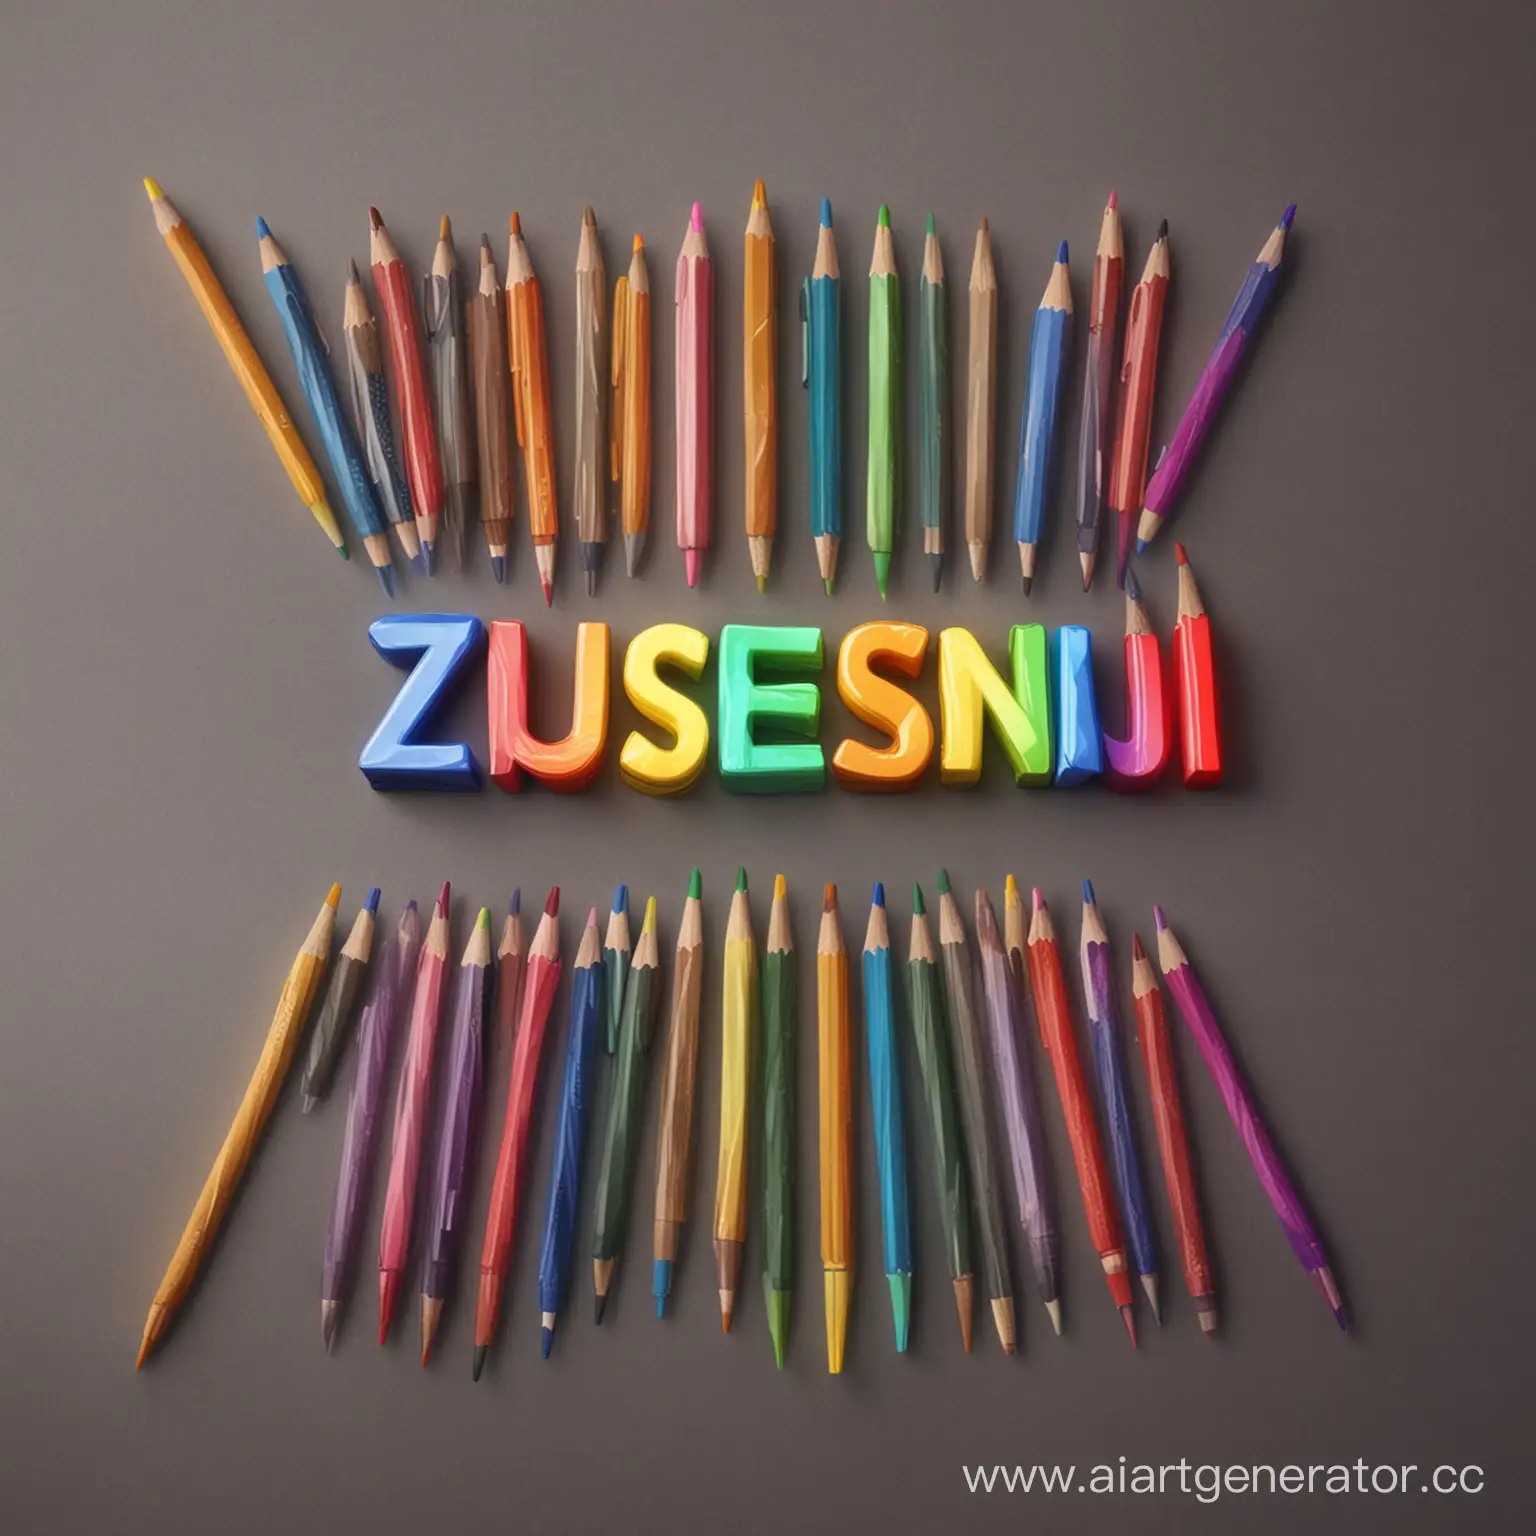 Colorful-Zausenskii-Animation-with-Rainbow-Pencils